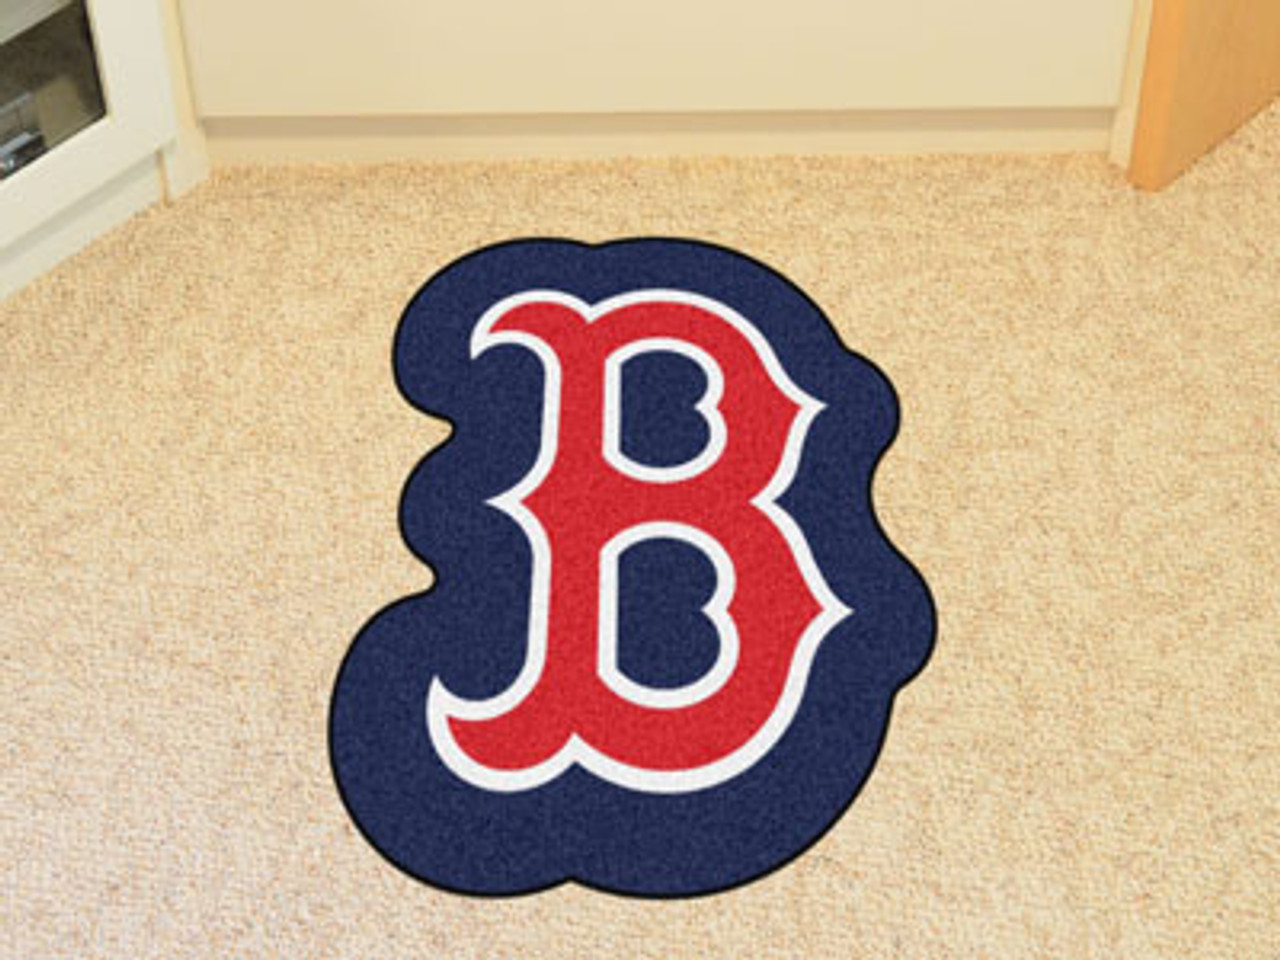 Boston Red Sox Mascot Mat - B Logo - Dragon Sports